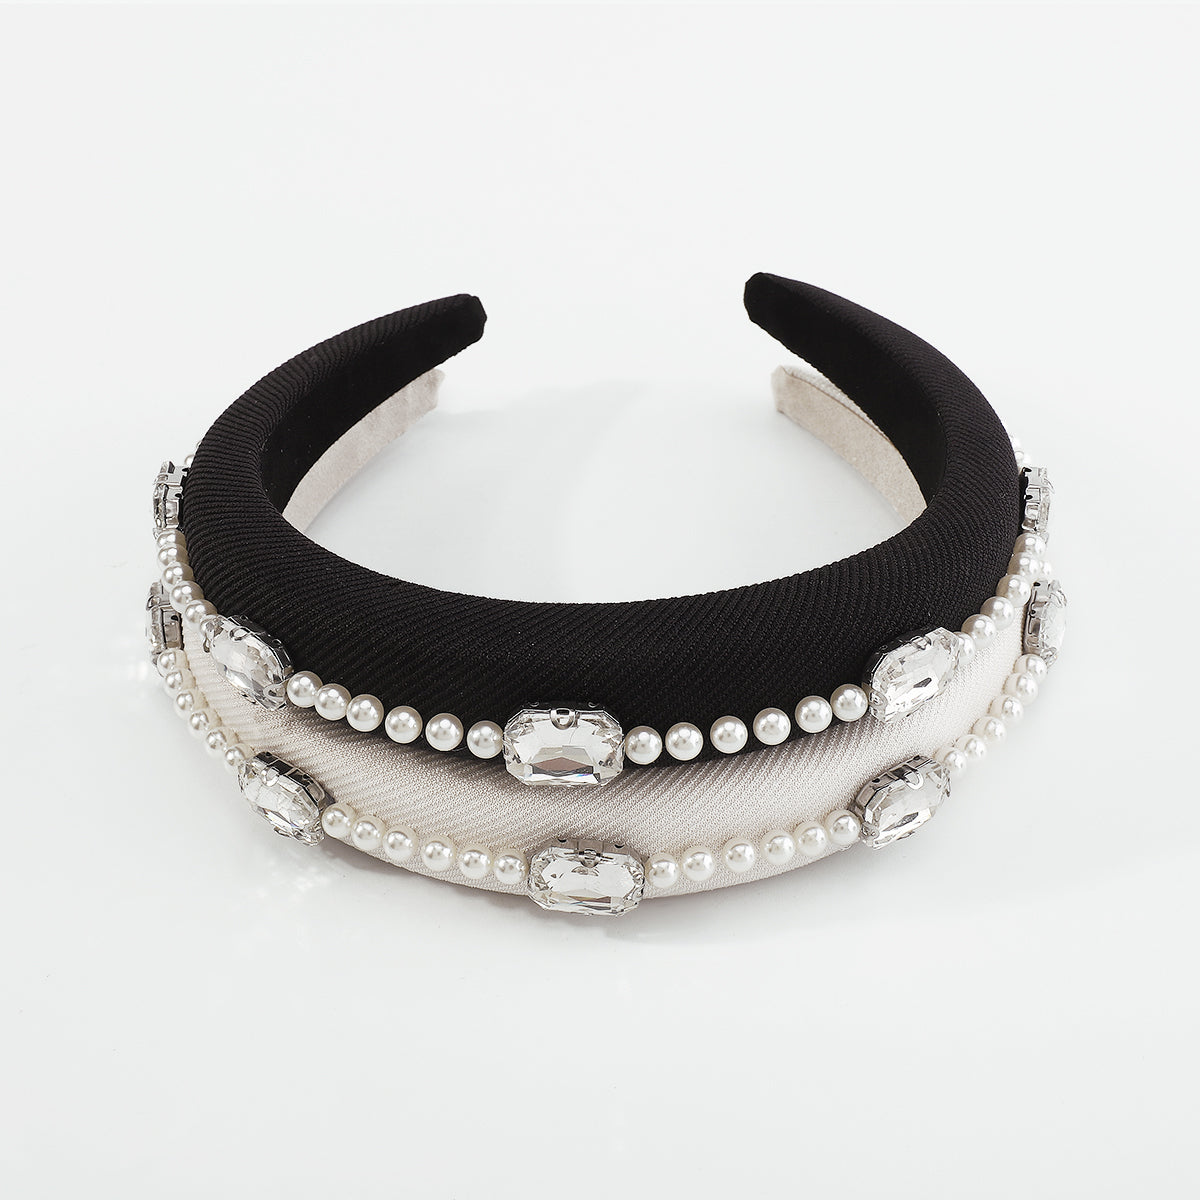 Trendy Rhinestone Pearls Sponge Padded Headband medyjewelry